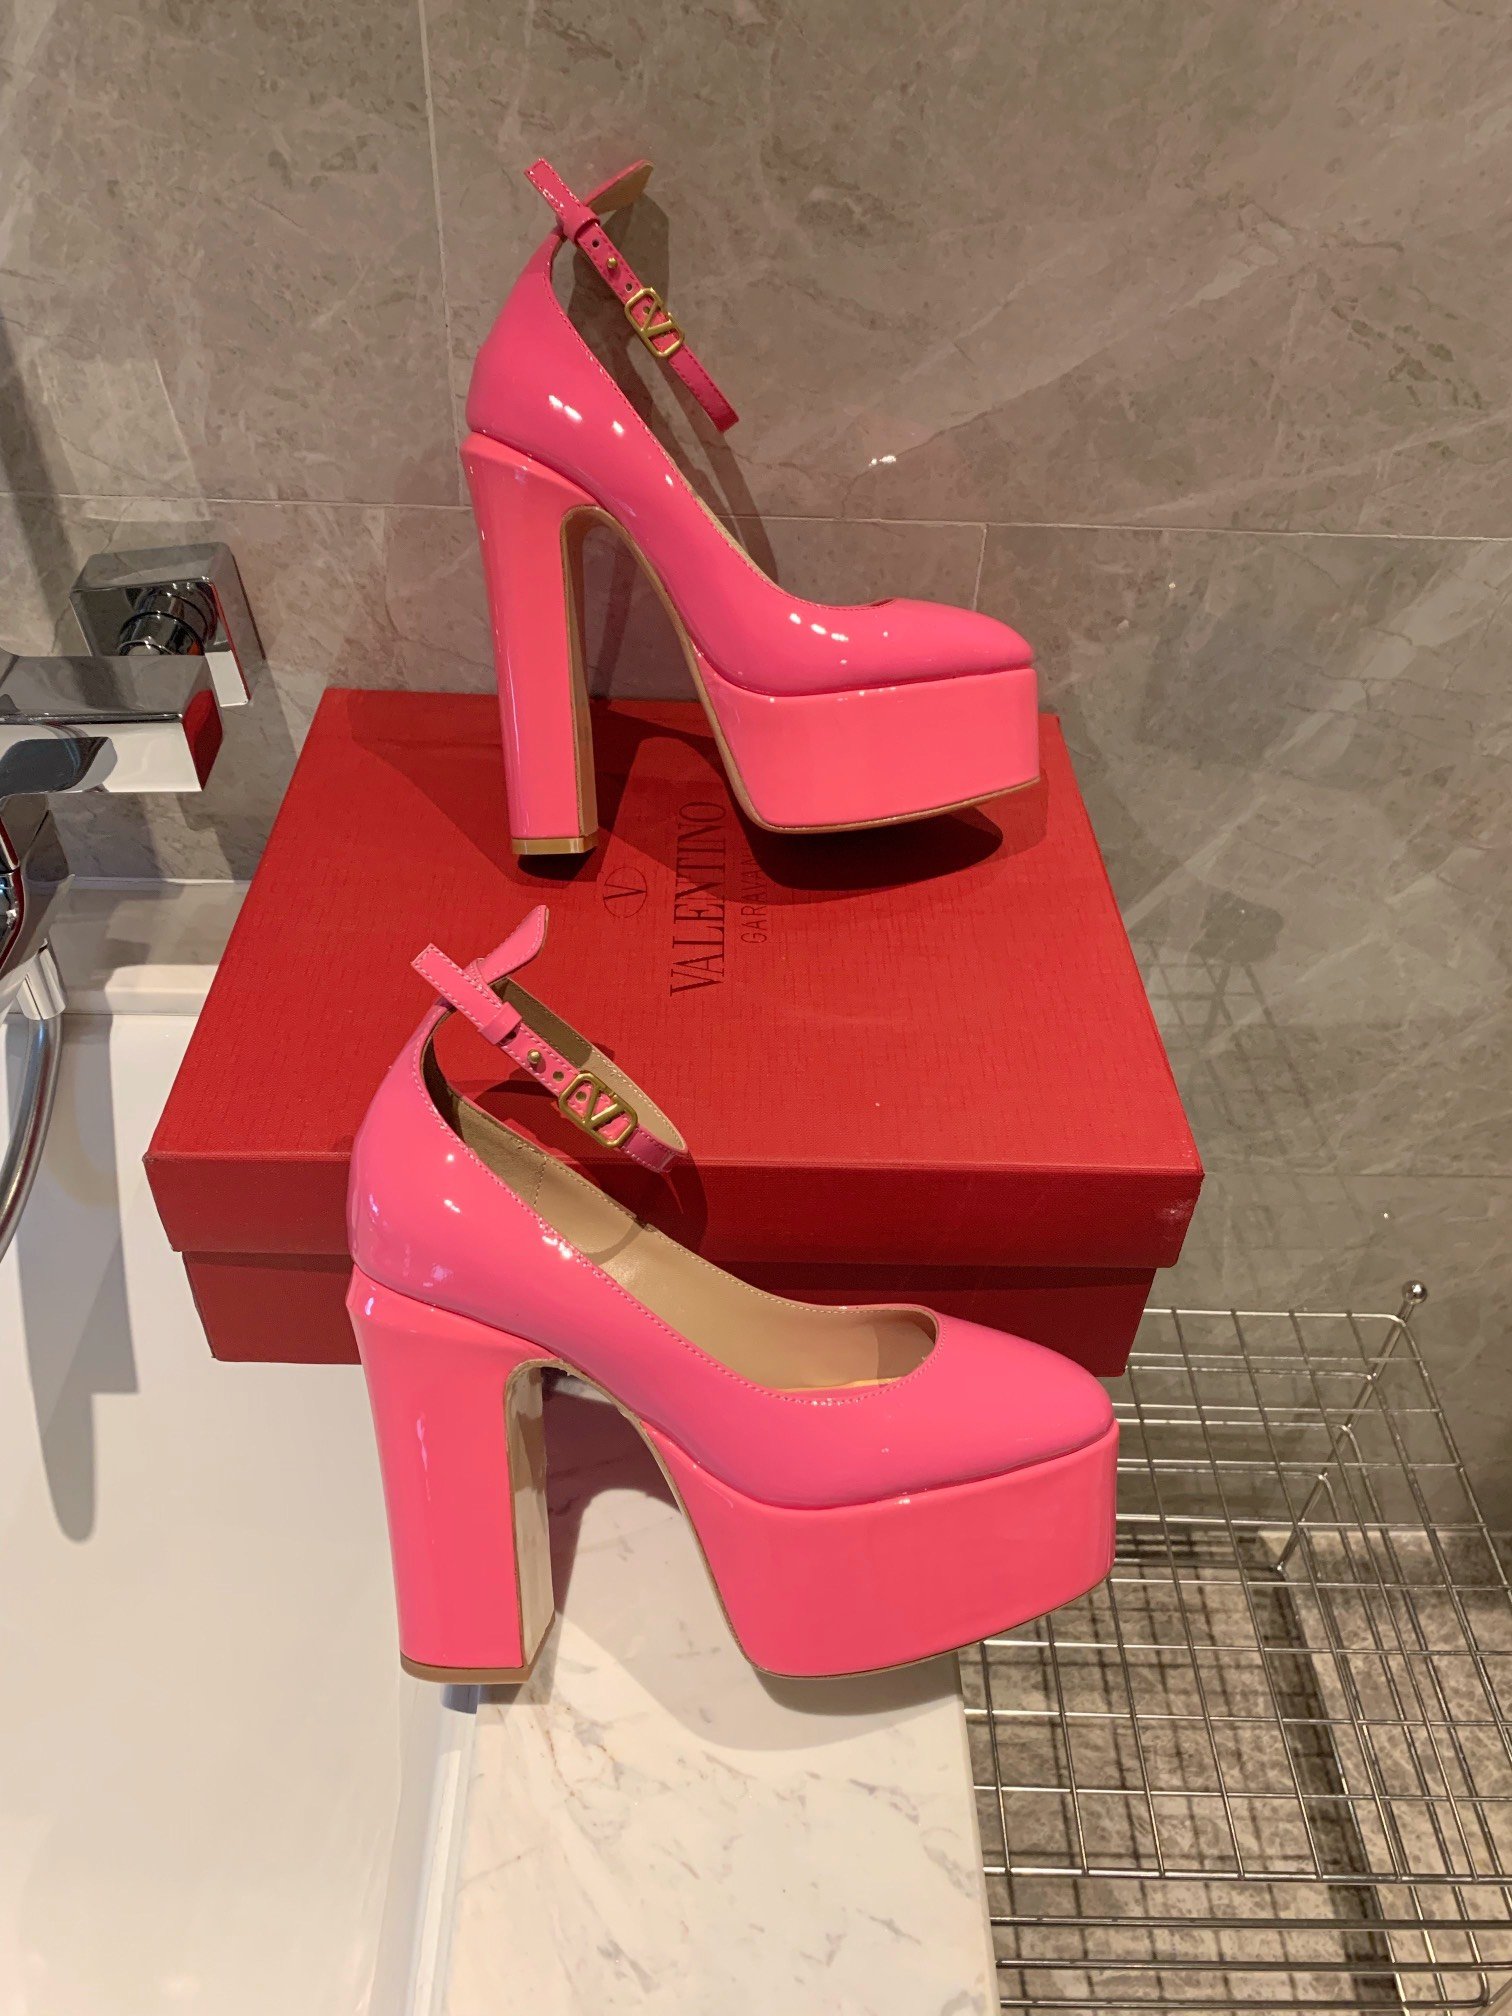 Shoes on platform and high heel pink